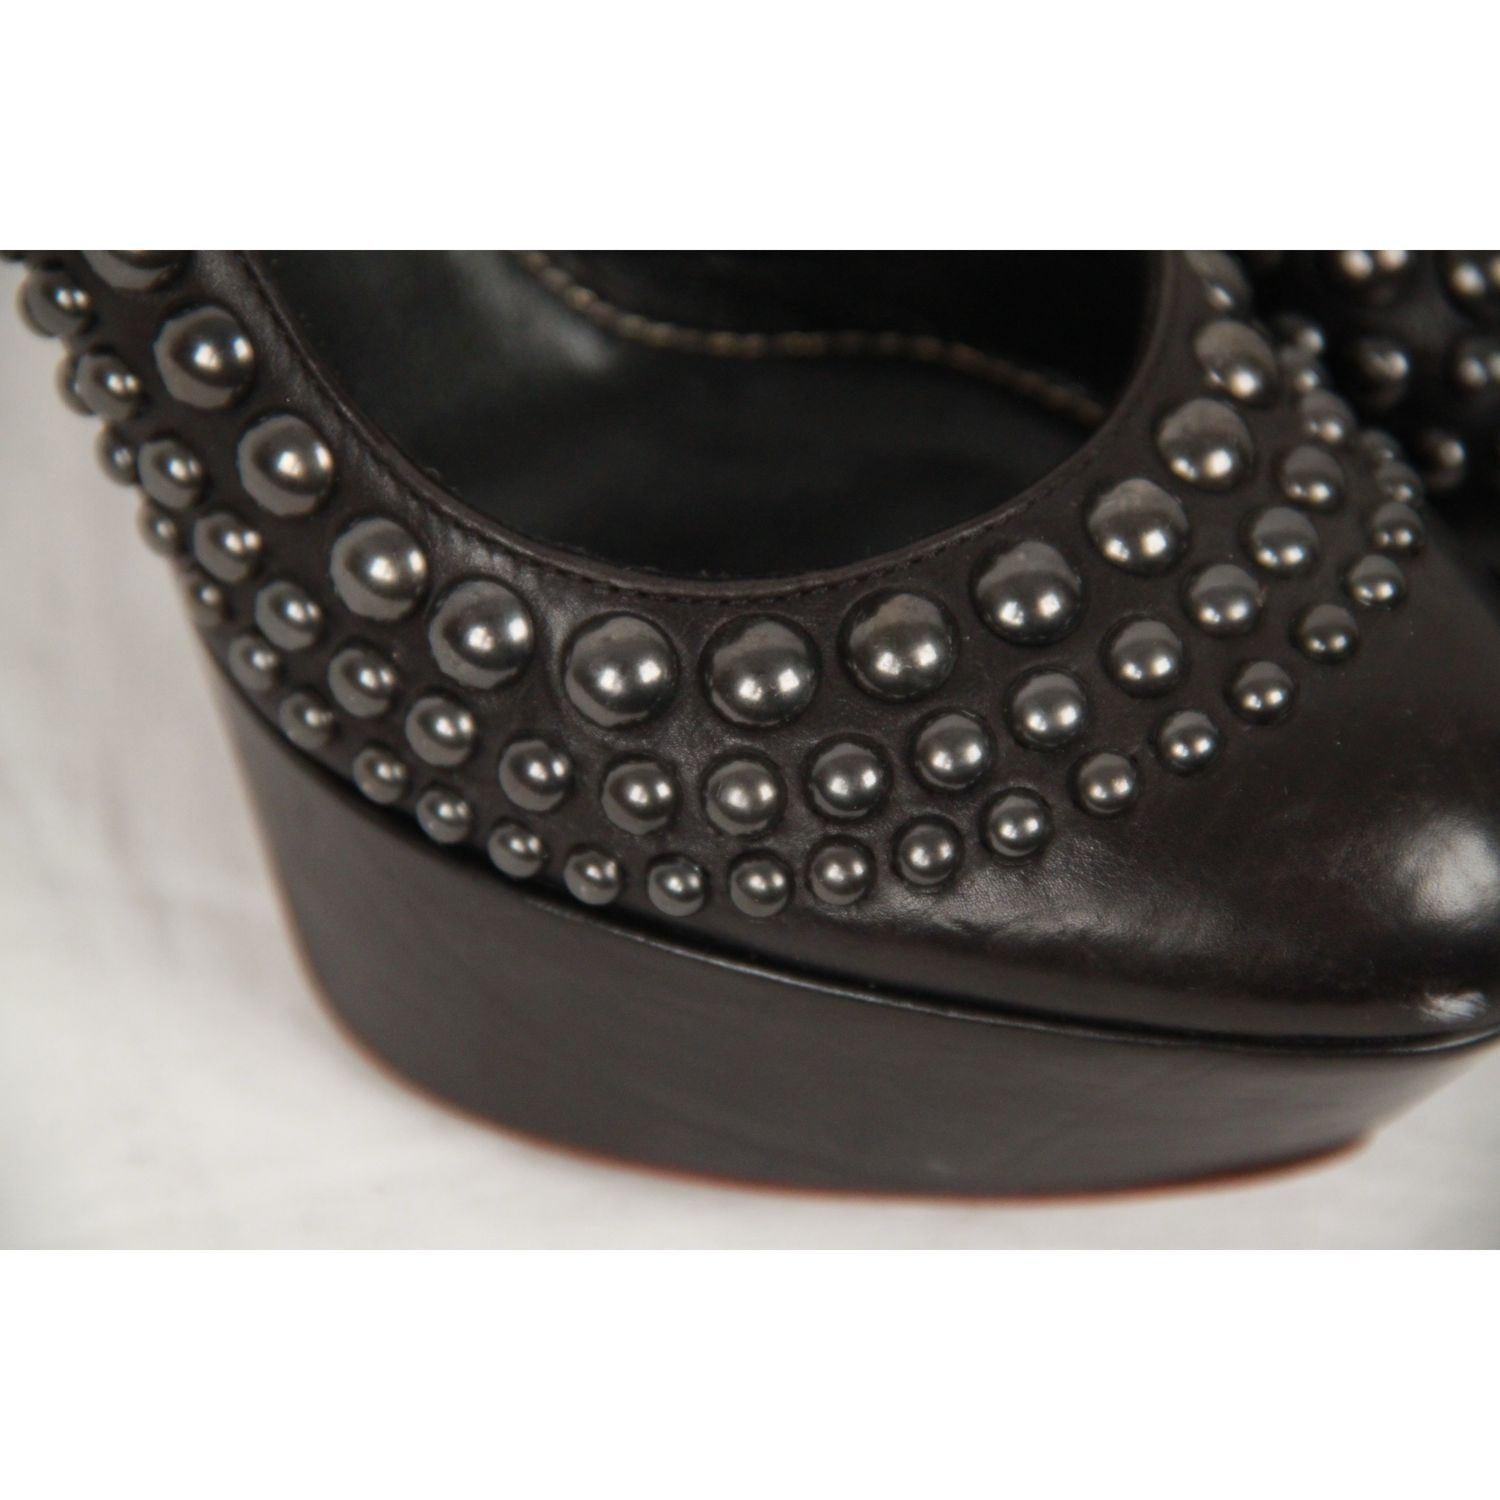 SERGIO ROSSI Black Leather Platform Heels STUDDED PUMPS Shoes SIZE 36 1